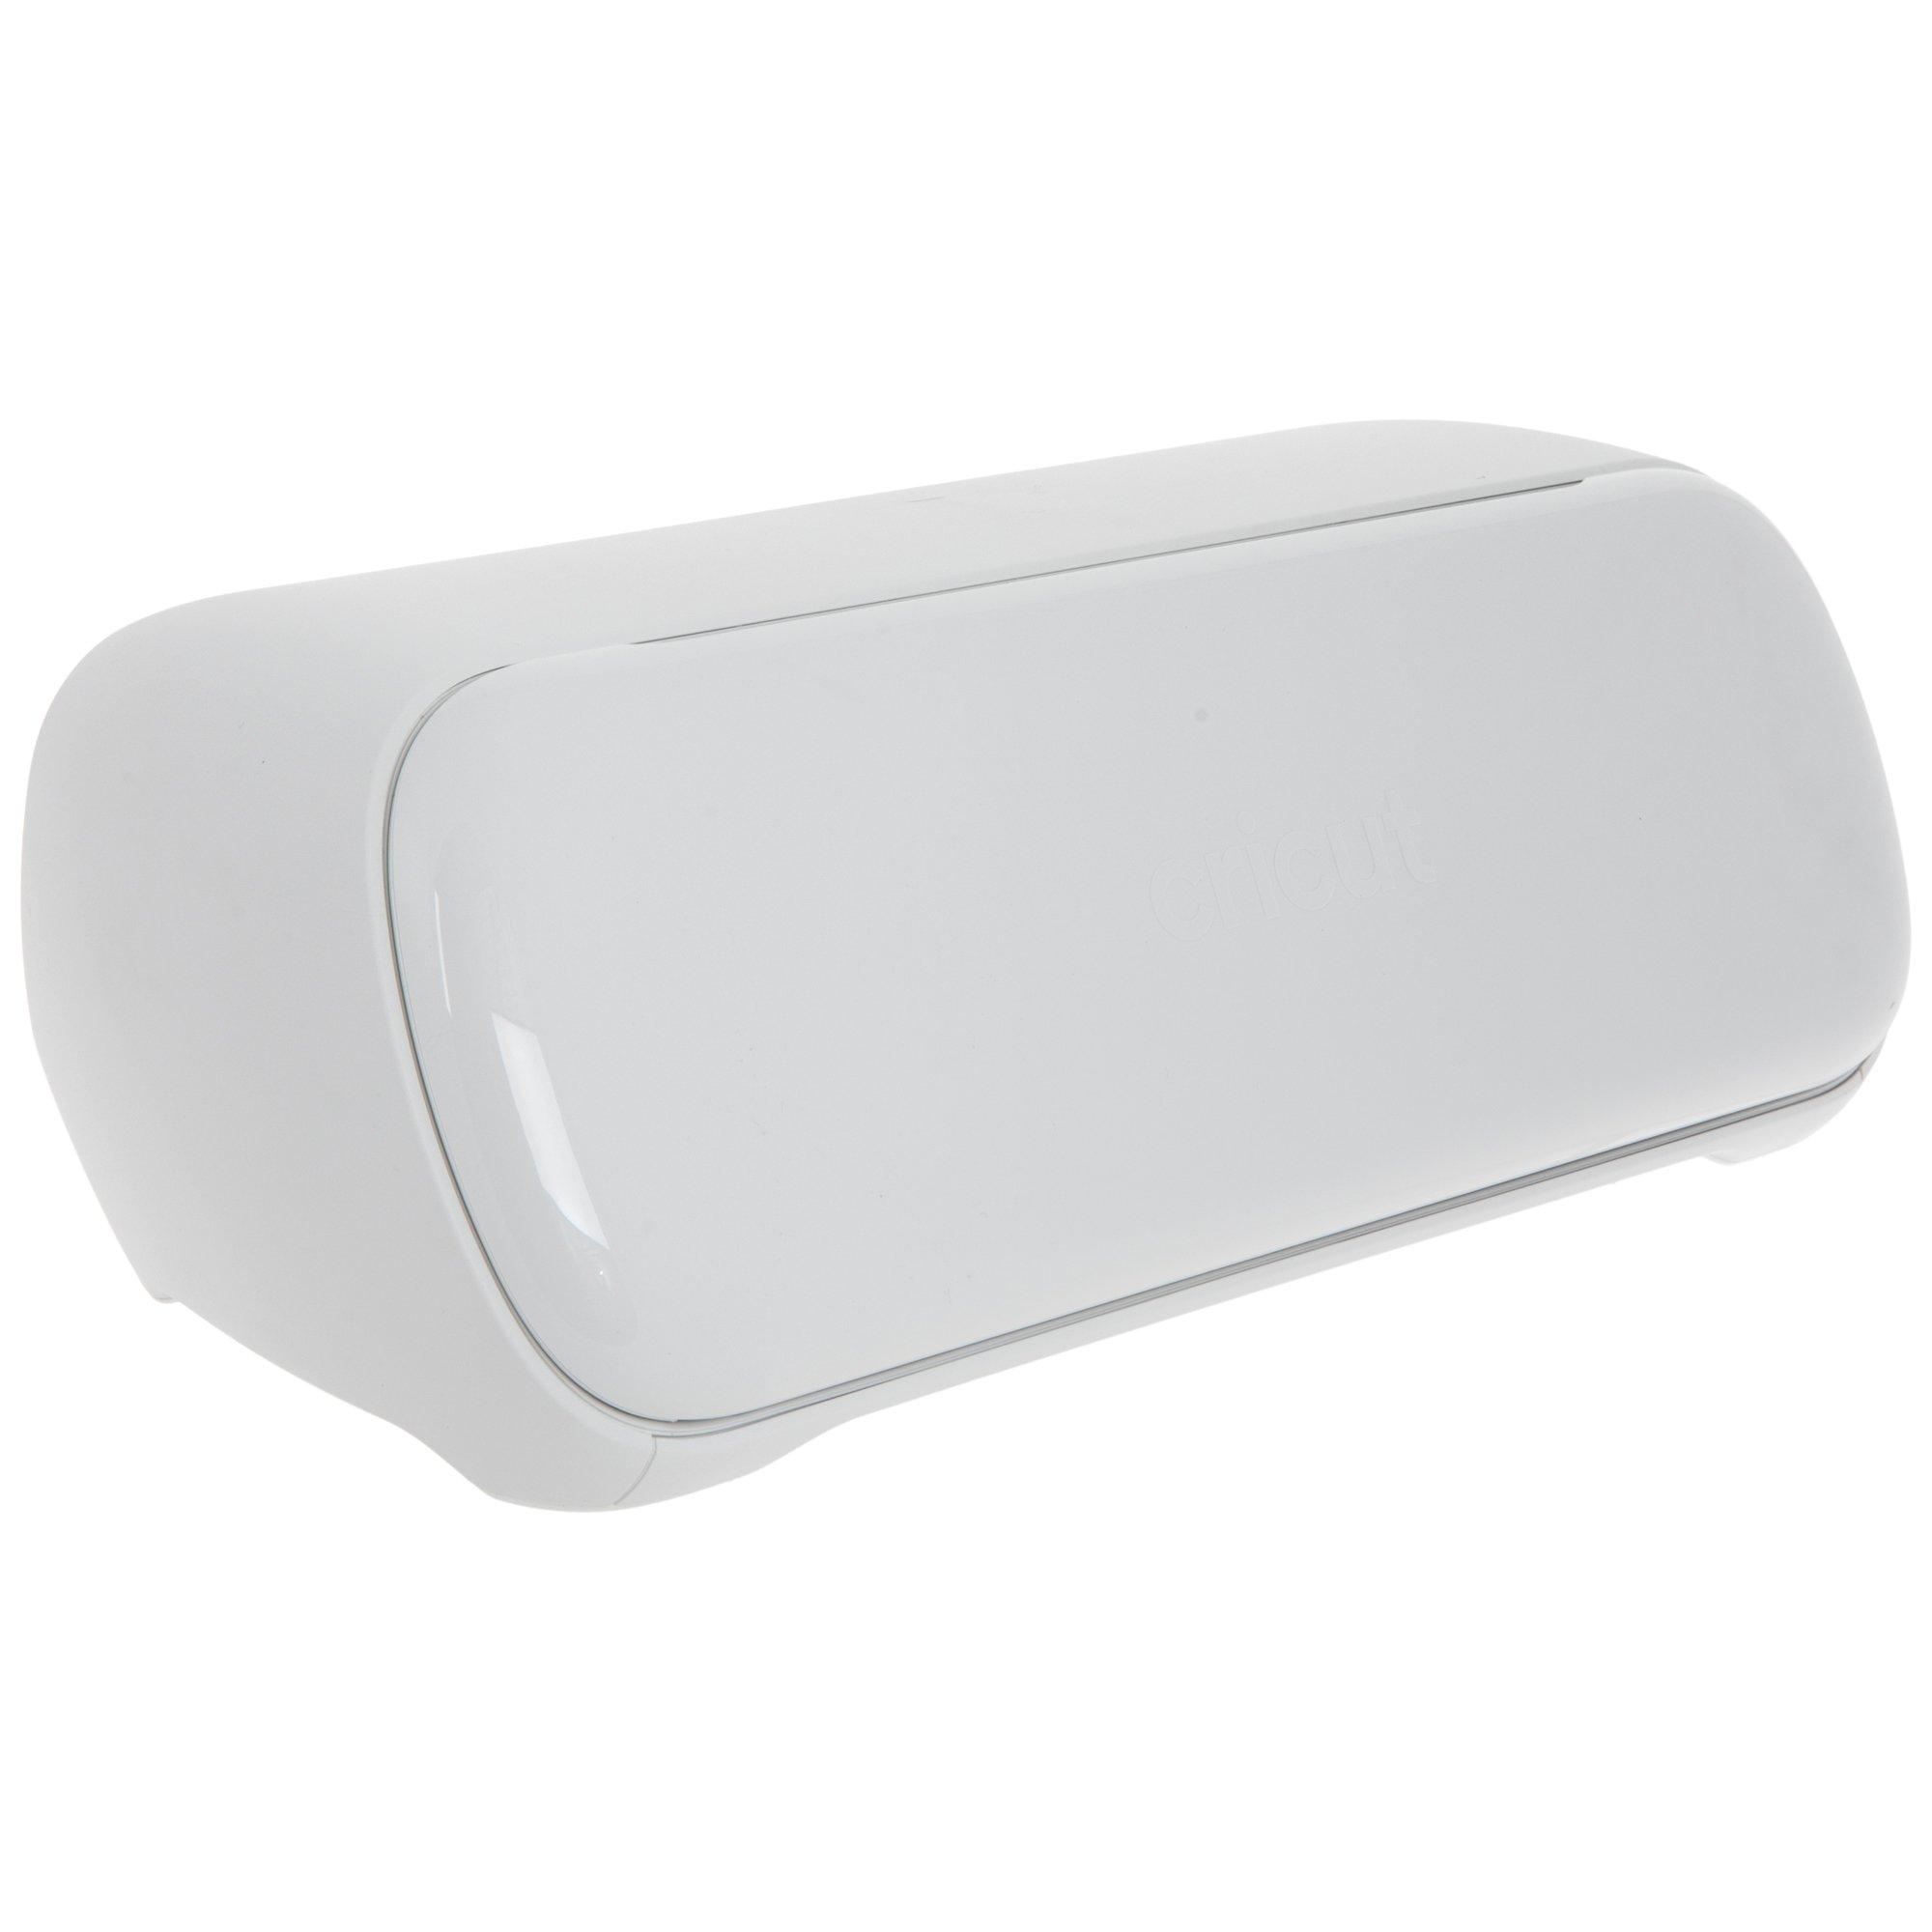 Cricut Joy Xtra™ Smart Cutting Machine White 2010313 - Best Buy